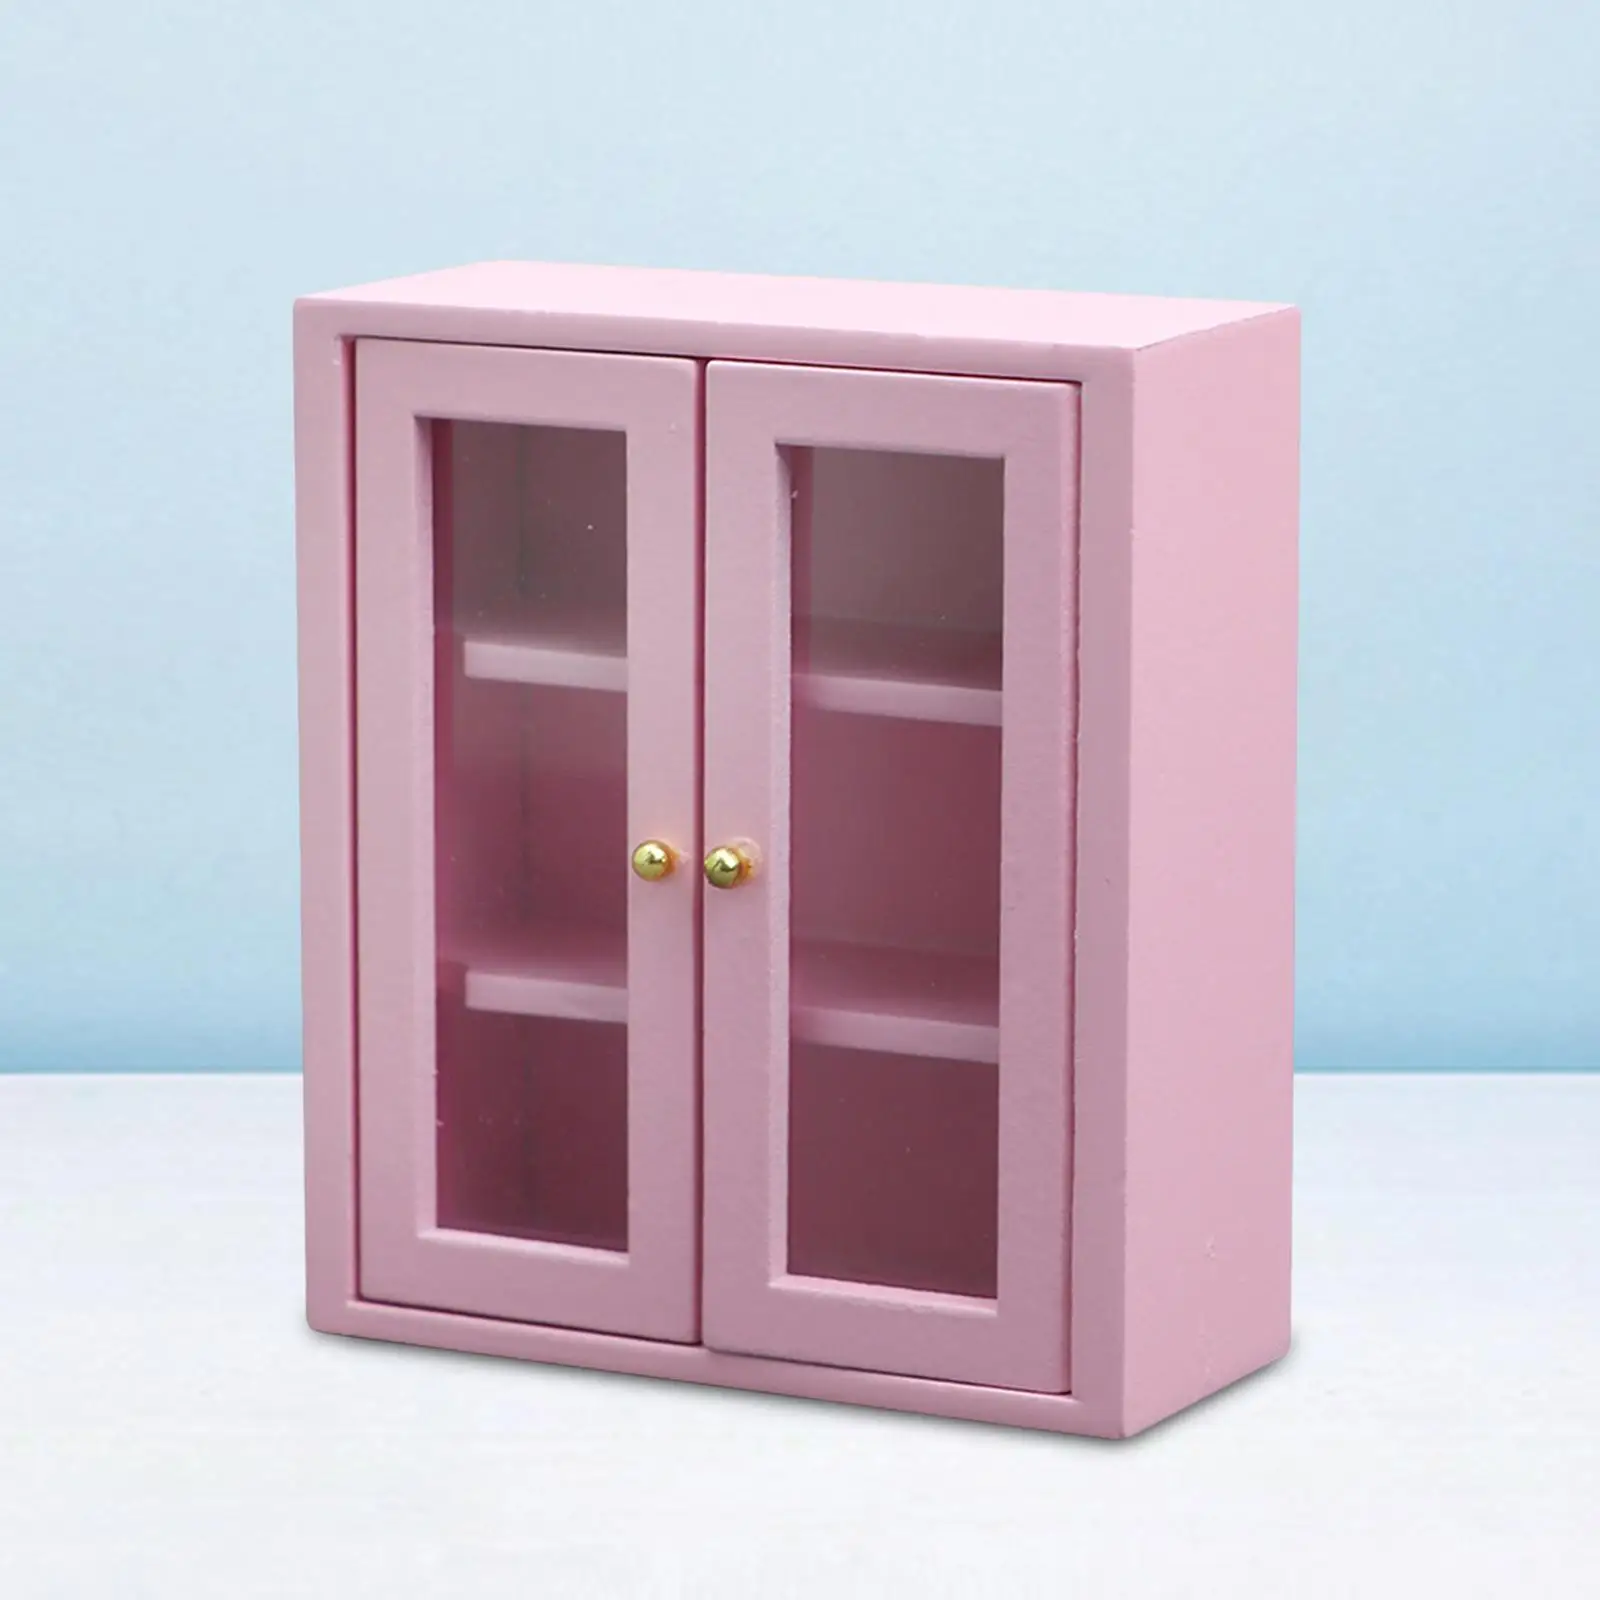 Miniature Dollhouse Cabinet Miniature Cupboard Dollhouse Furniture Accessory Kids Pretend Toys for Children Kids Birthday Gifts